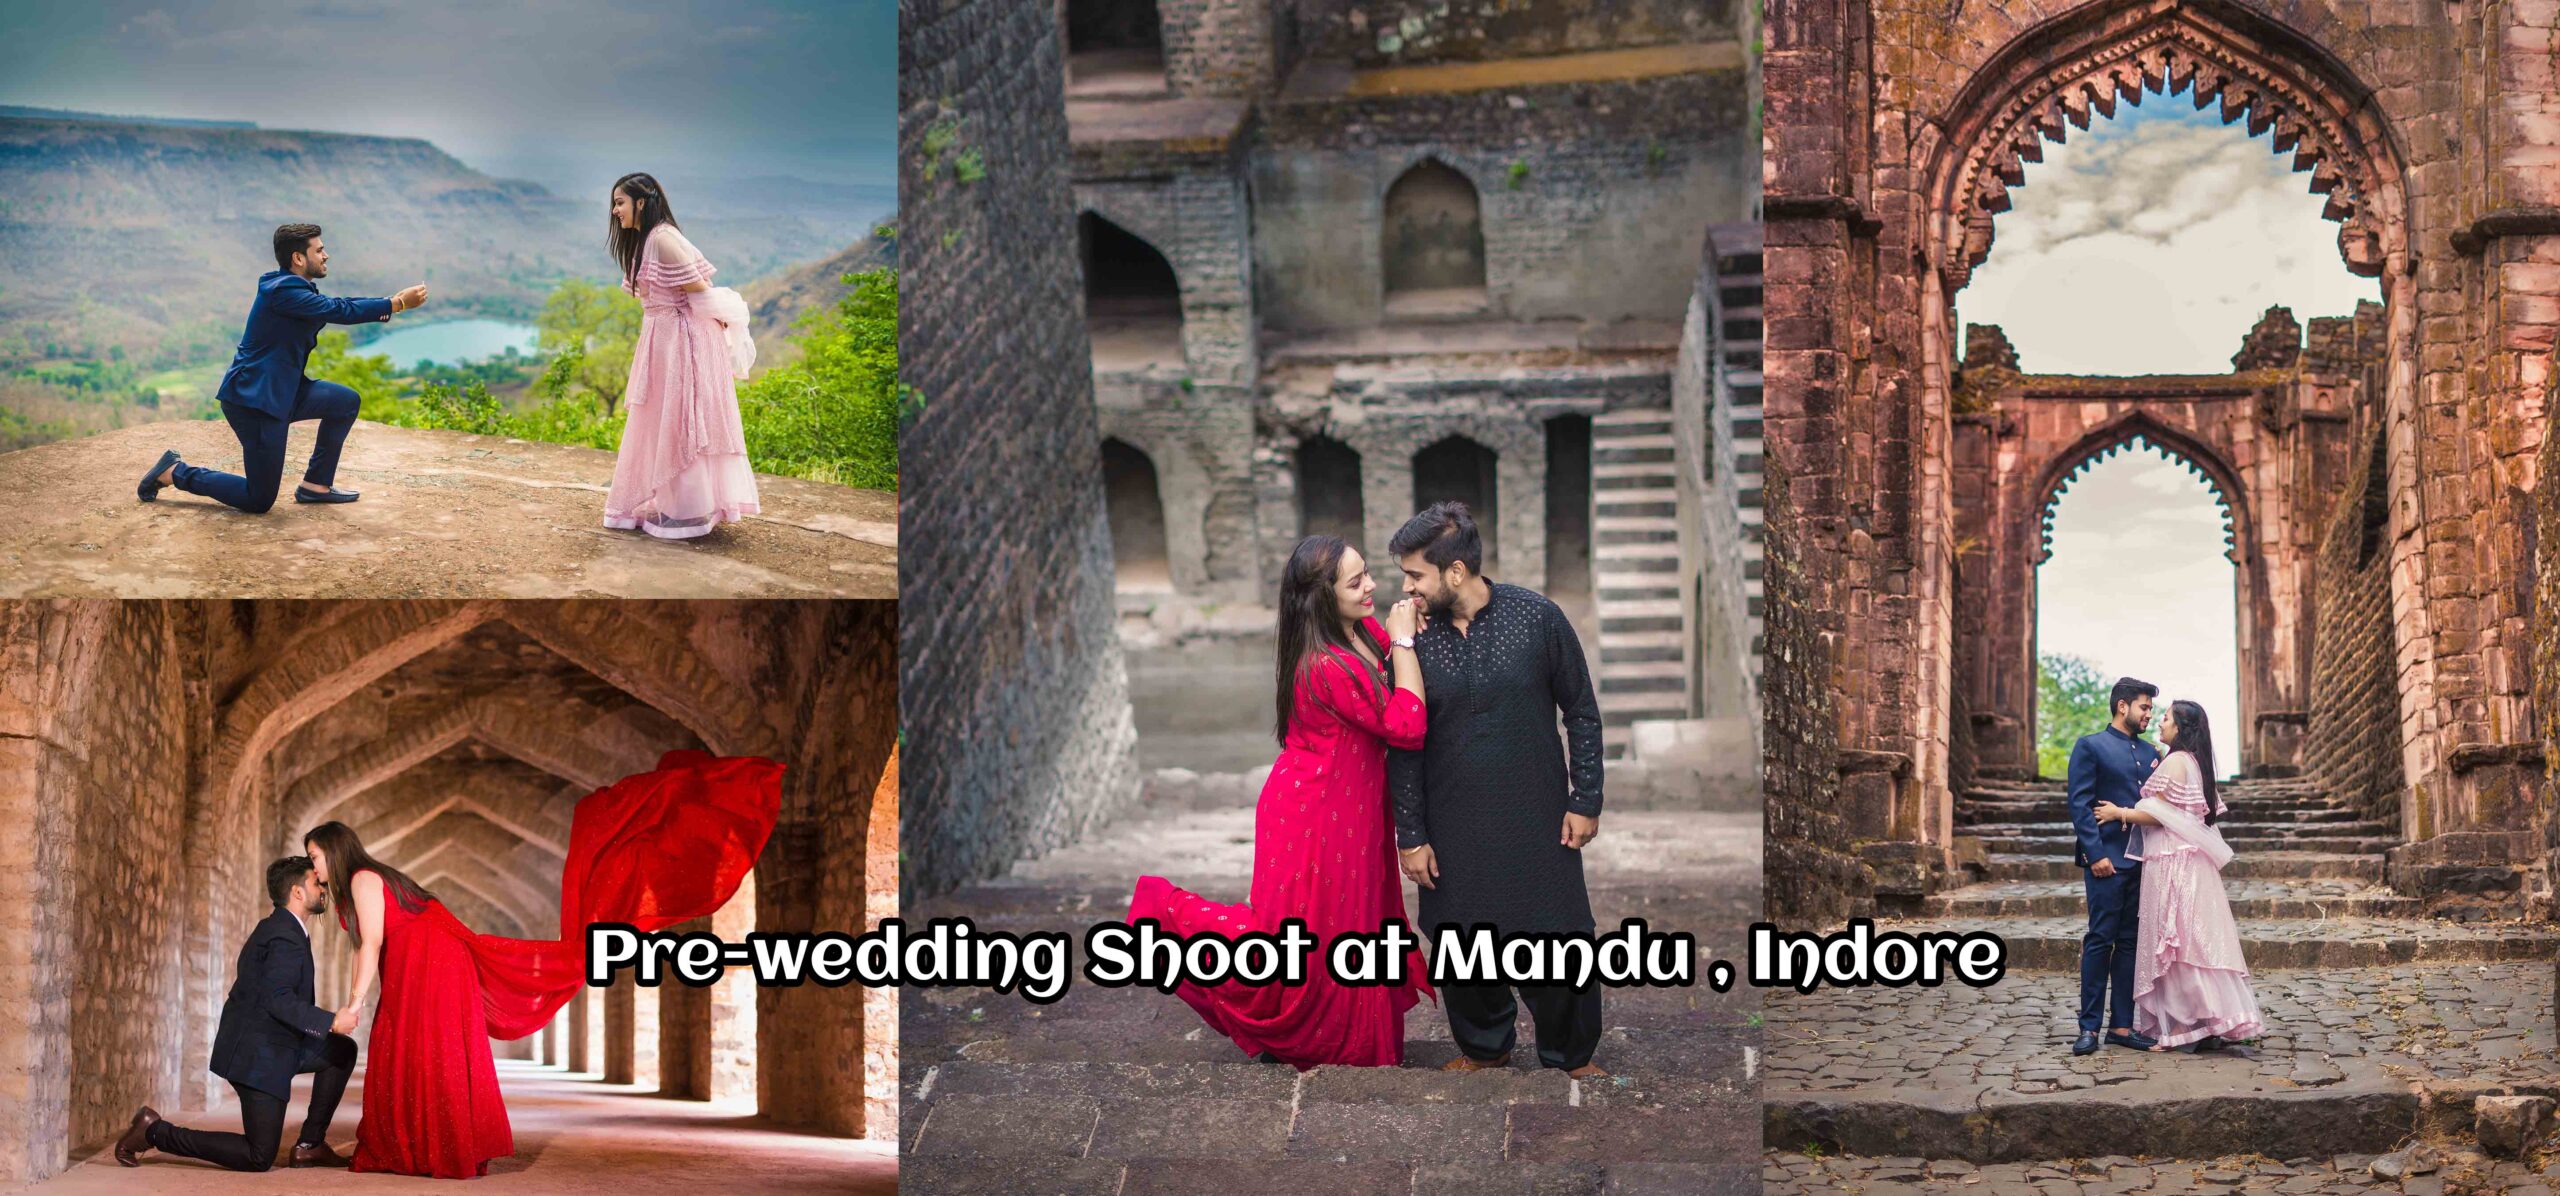 Alt Text: Pre-wedding shoot at historic Mandu, Madhya Pradesh, featuring a joyful couple captured by Harsh Studio Photography amidst ancient architecture.